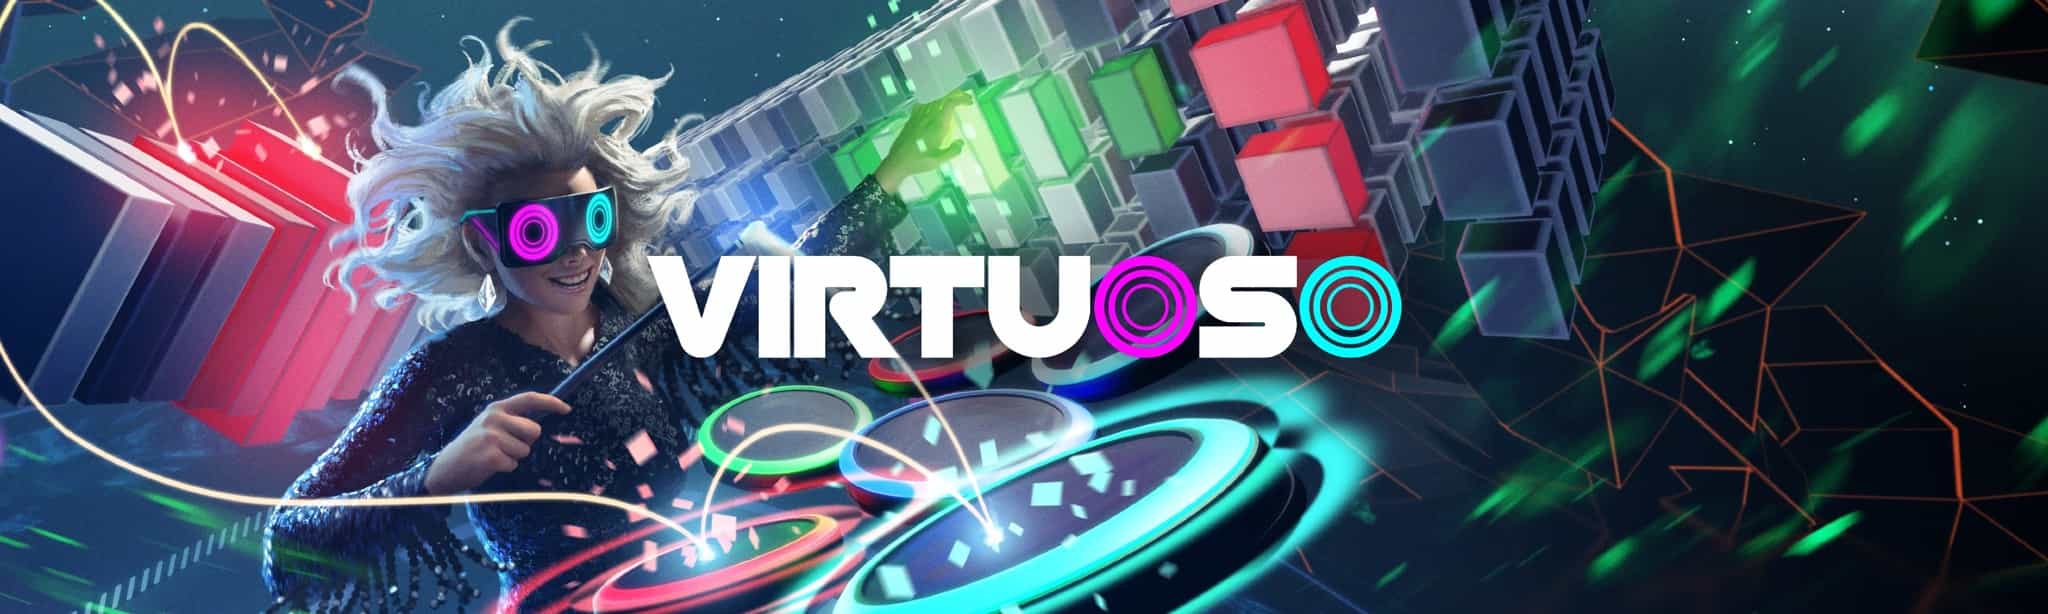 Oculus Quest 游戏《Virtuoso VR》音乐达人